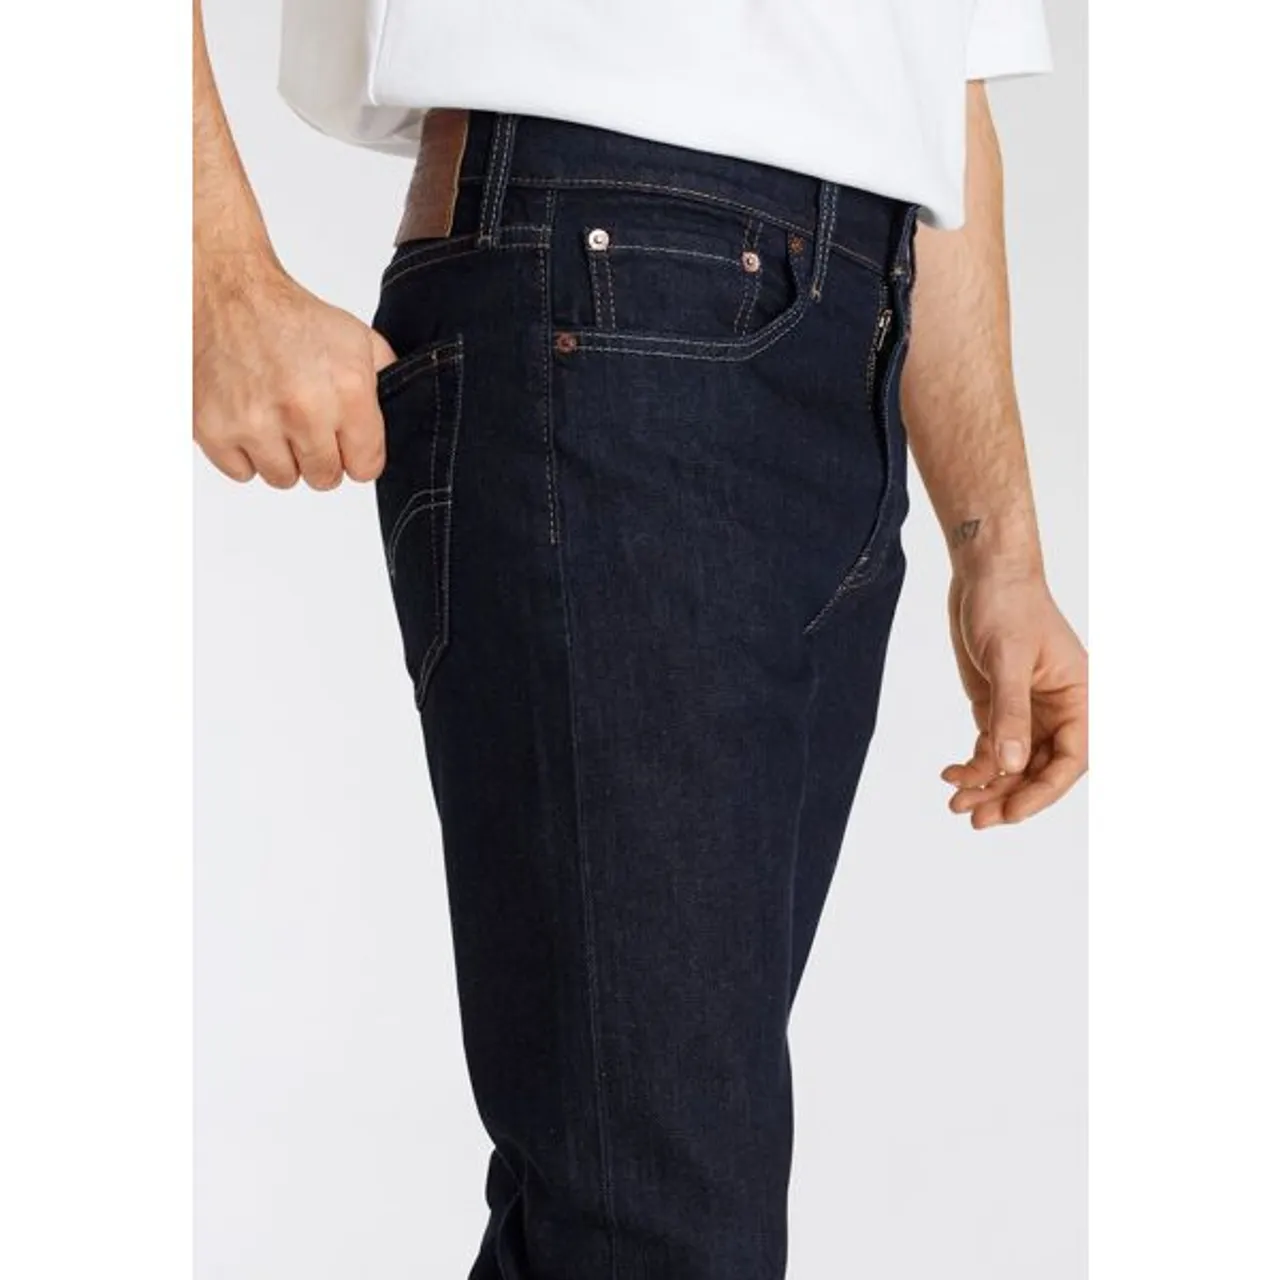 Tapered-fit-Jeans LEVI'S "512 Slim Taper Fit" Gr. 34, Länge 36, blau (dark indigo) Herren Jeans Tapered-Jeans mit Markenlabel